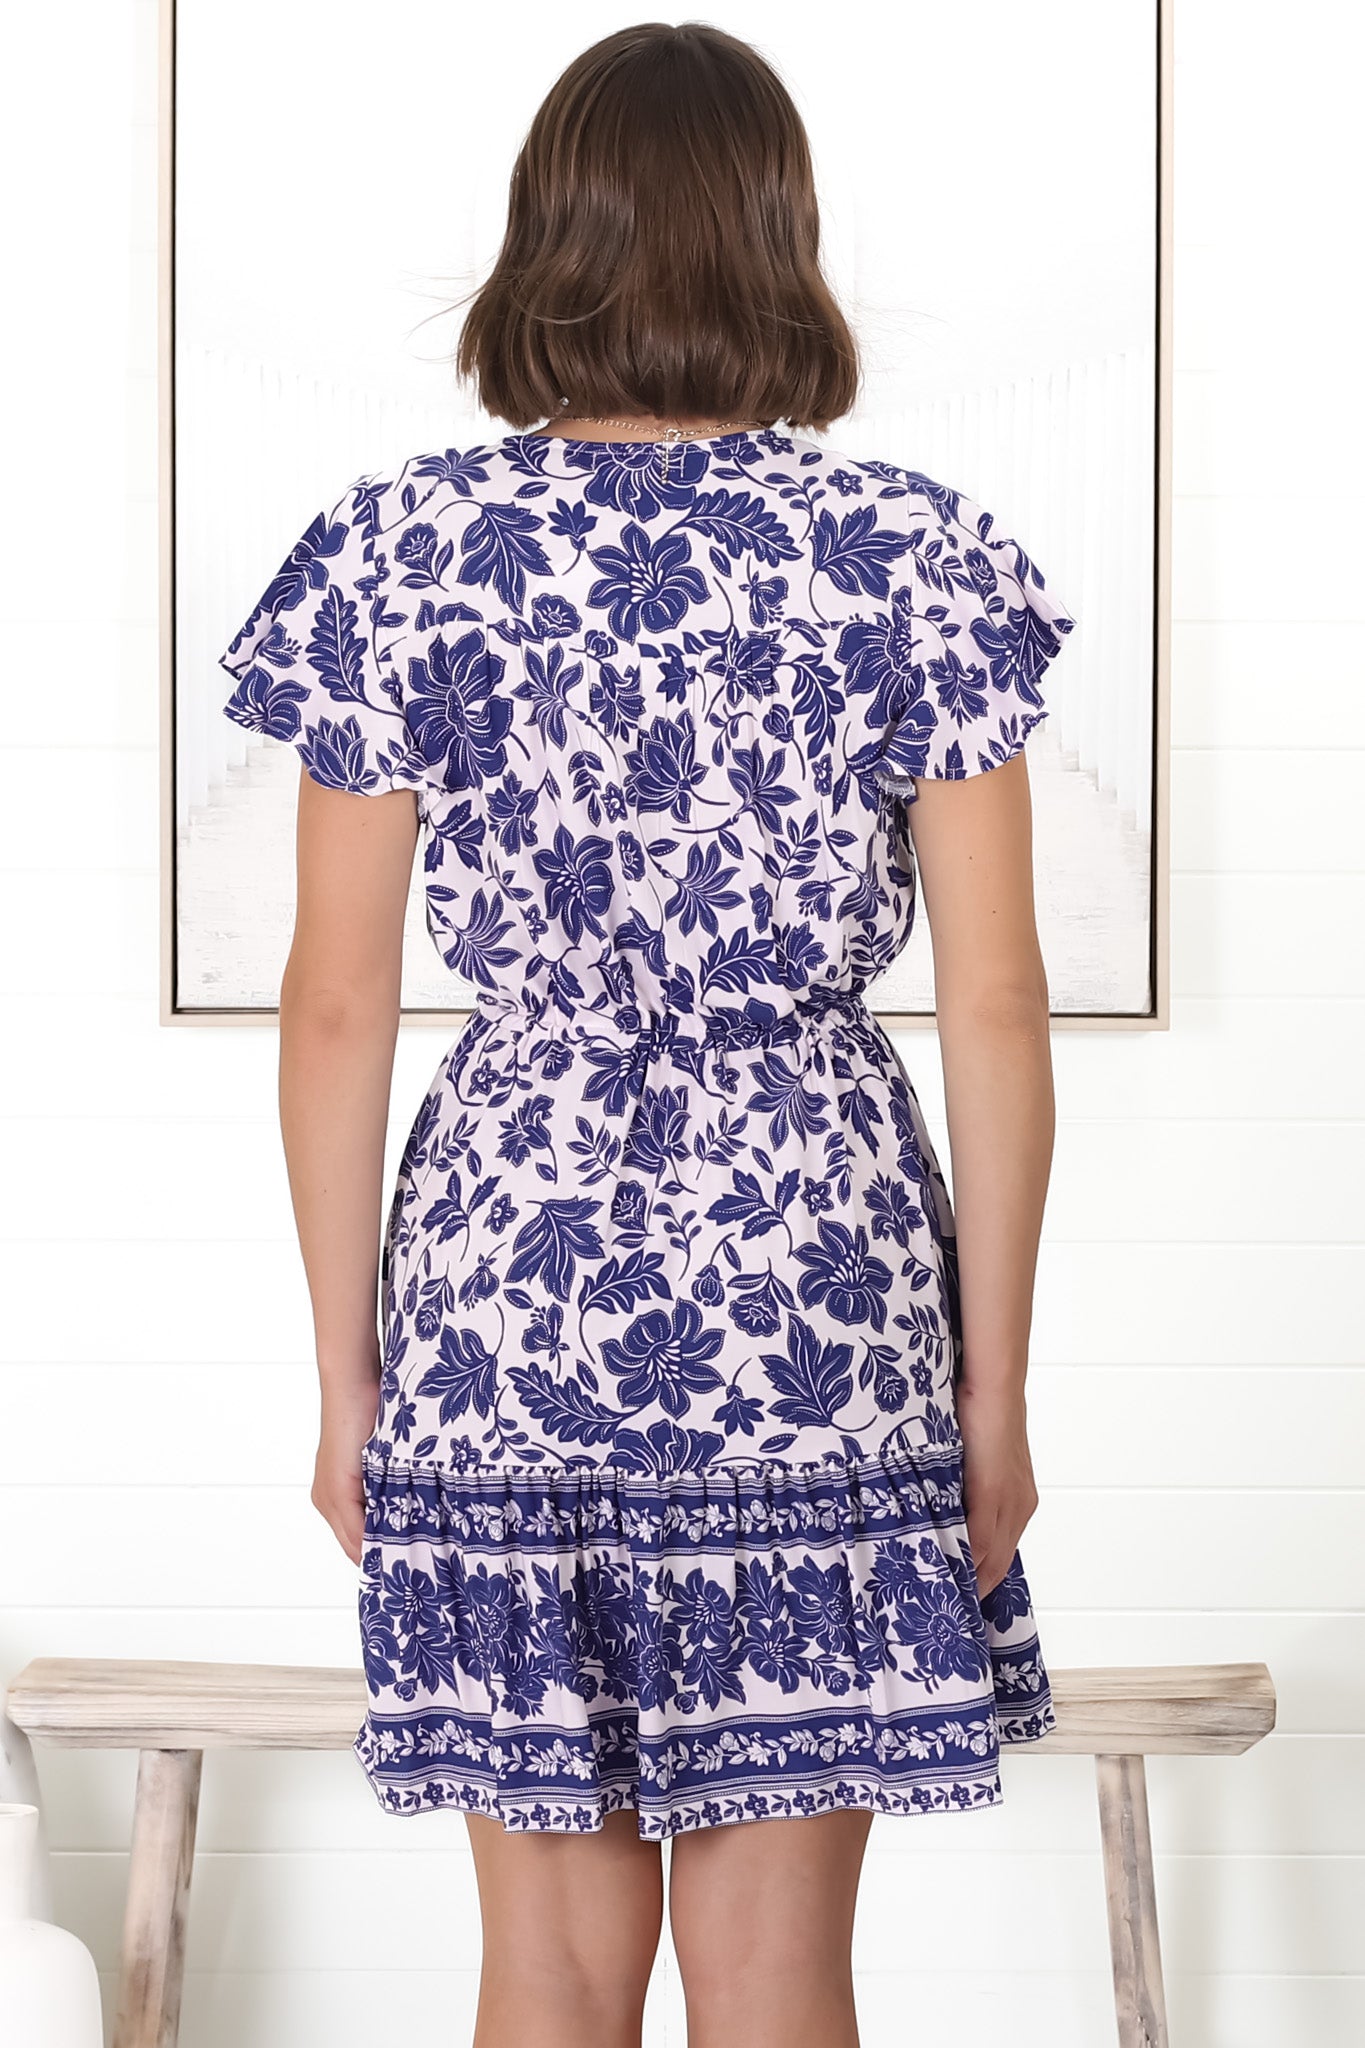 Bailey Mini Dress - Cap Sleeve A Line Dress in Floral Print